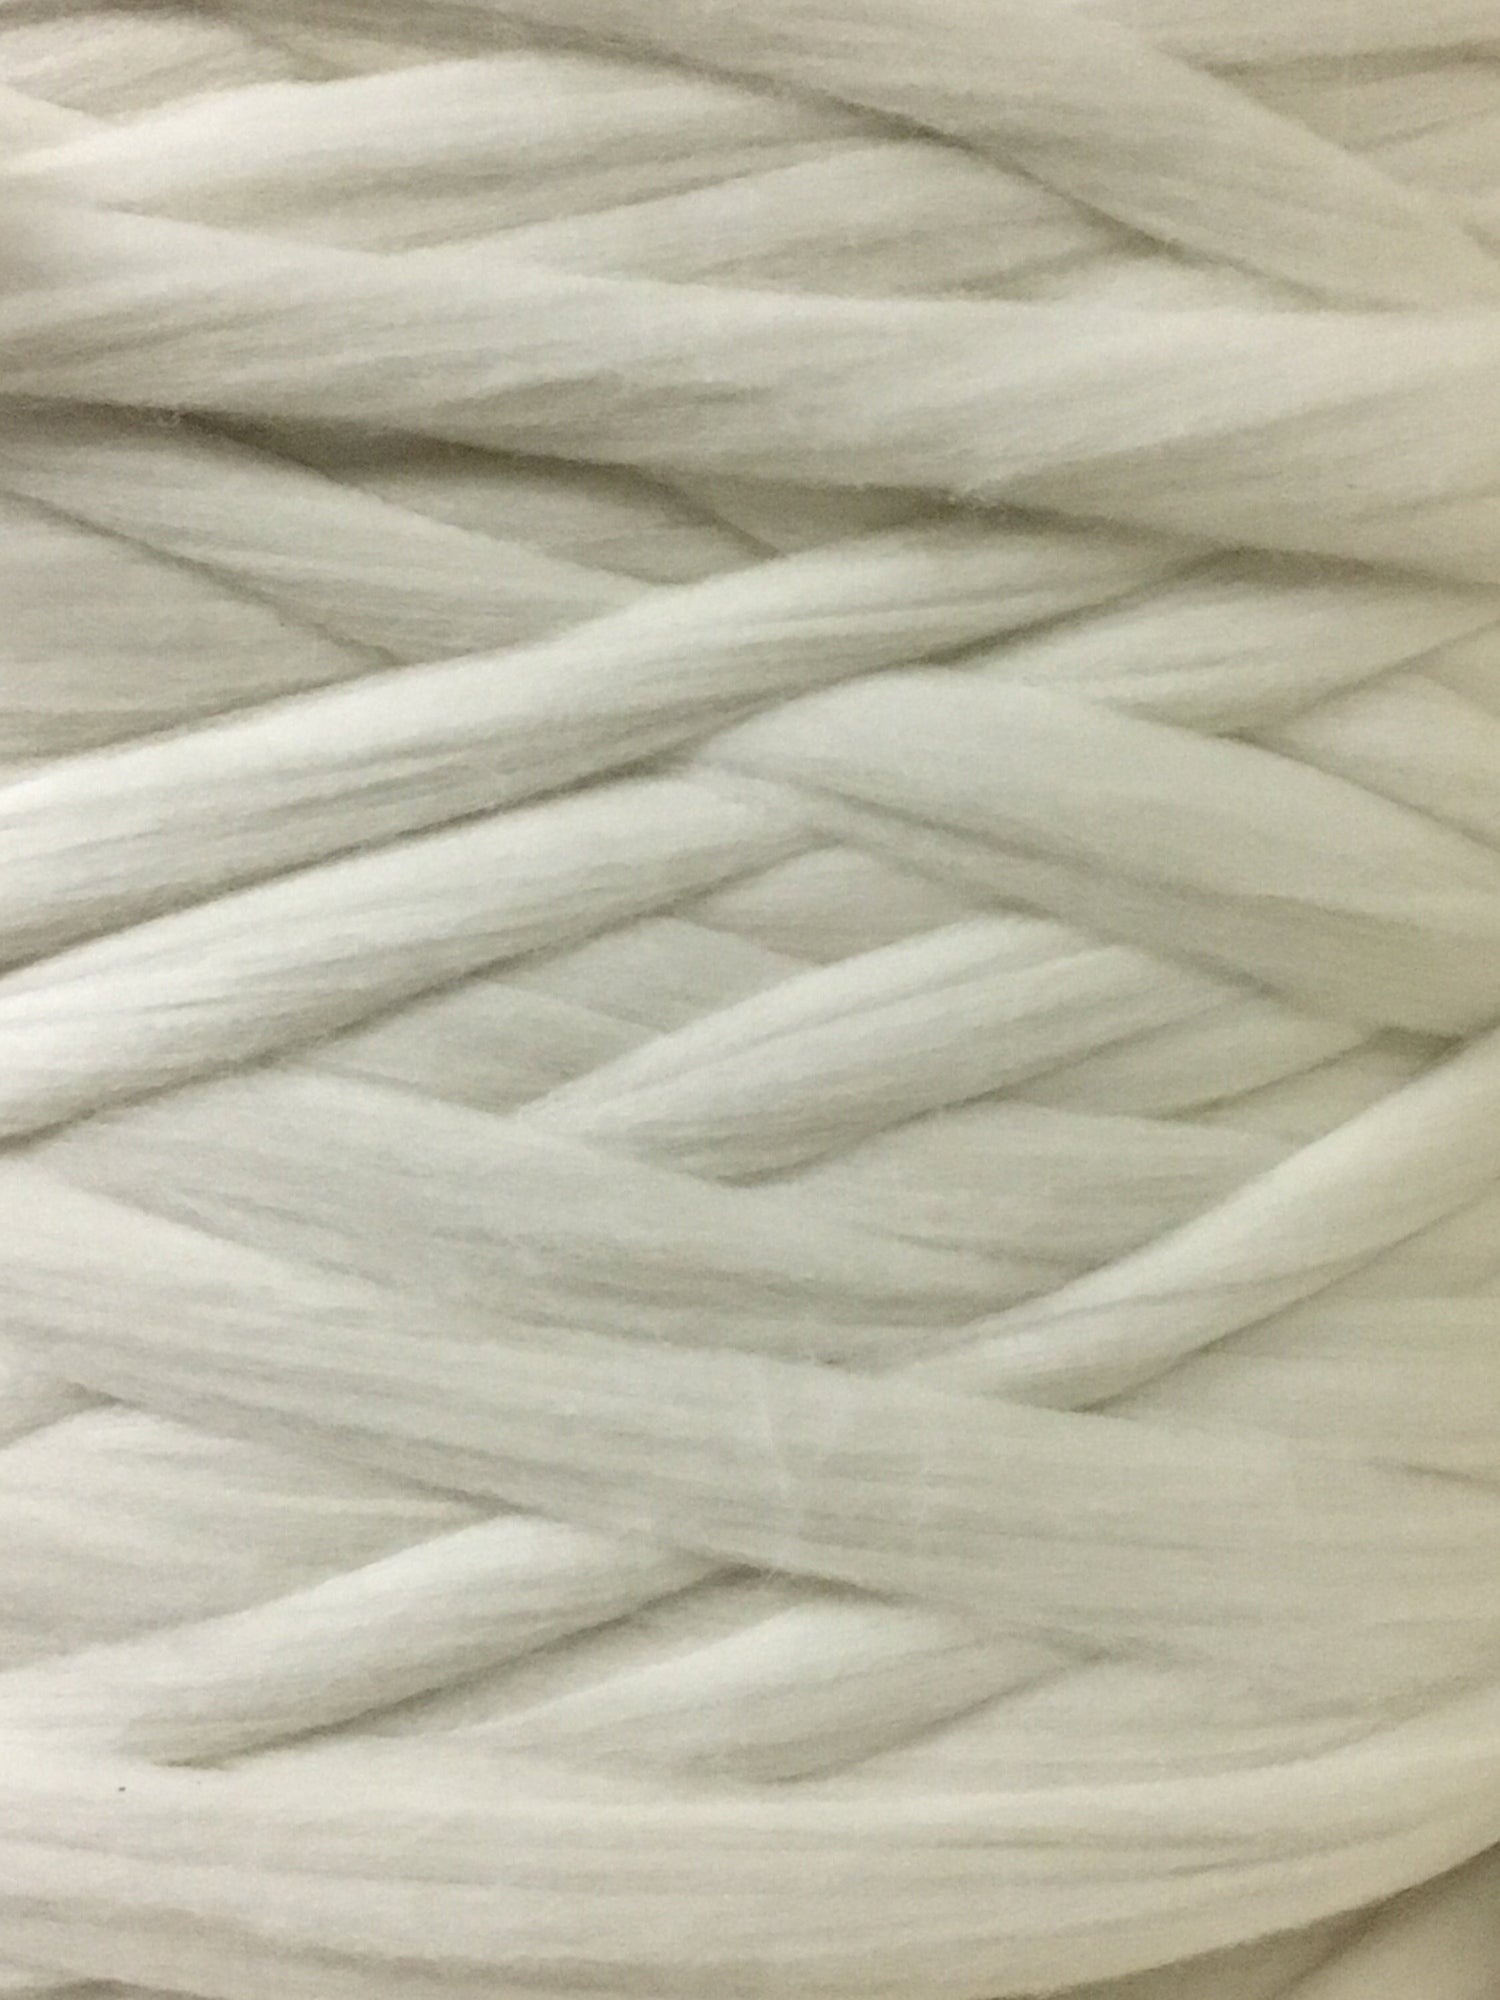 7 lbs Pounds Wool Chunky Yarn, Bulk Chunky Yarn, Wool Roving Fiber Jum –  Shep's Wool